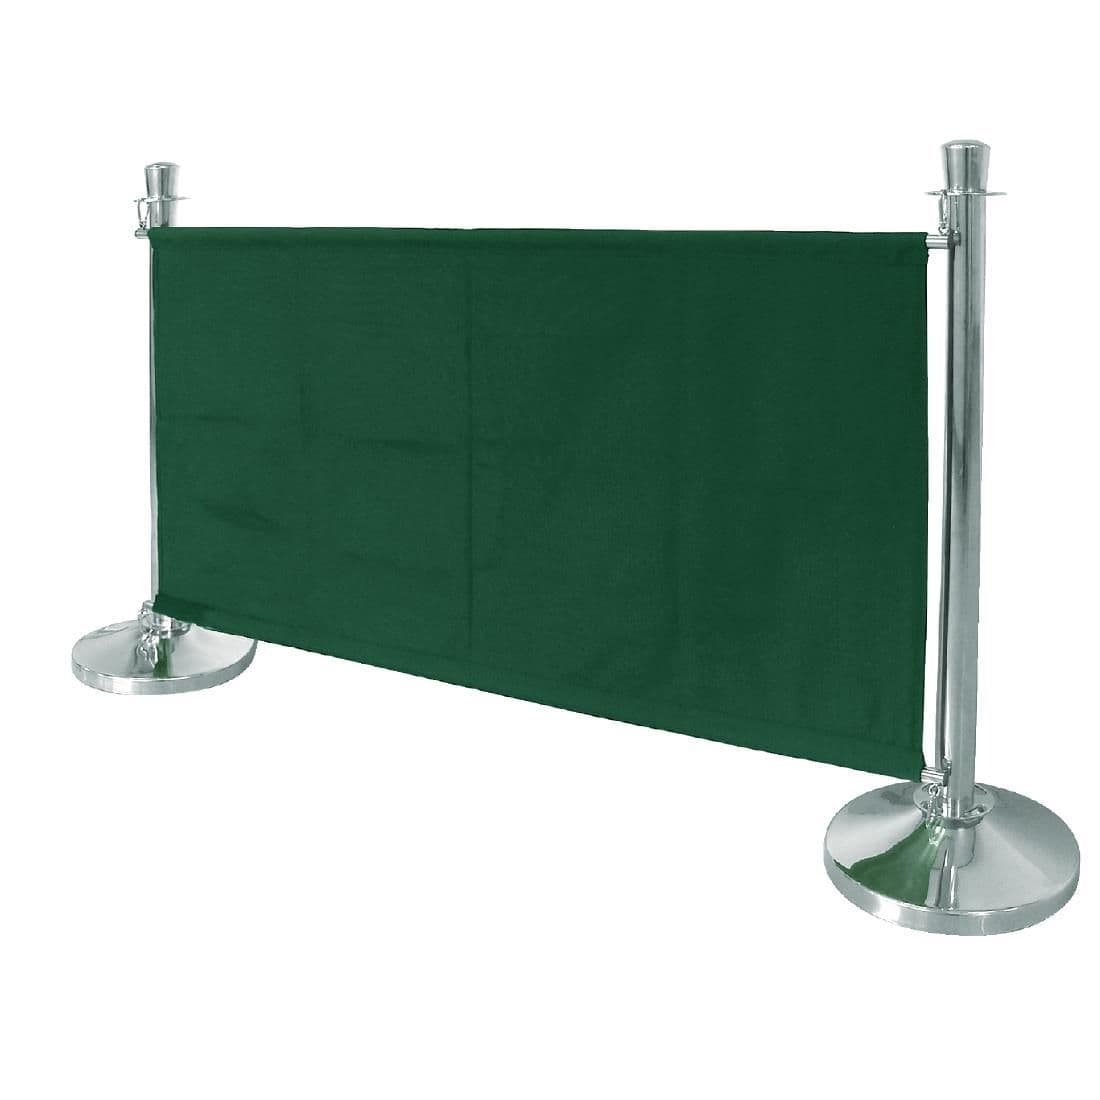 Bolero Green Canvas Barrier JD Catering Equipment Solutions Ltd